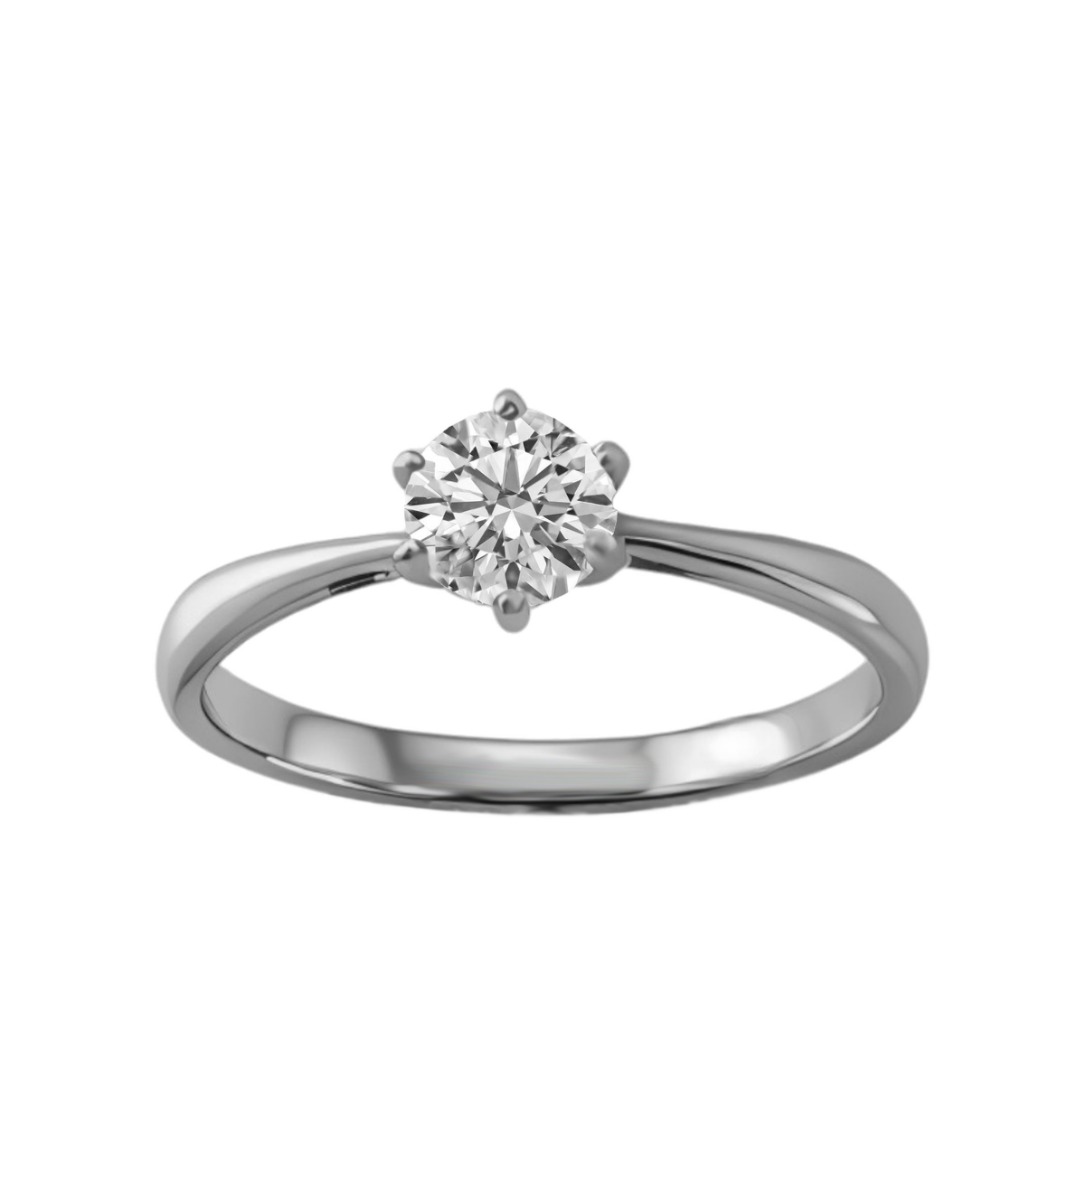 anillo compromiso solitario garra 6 patas con diamante de medio quilate foto frontal